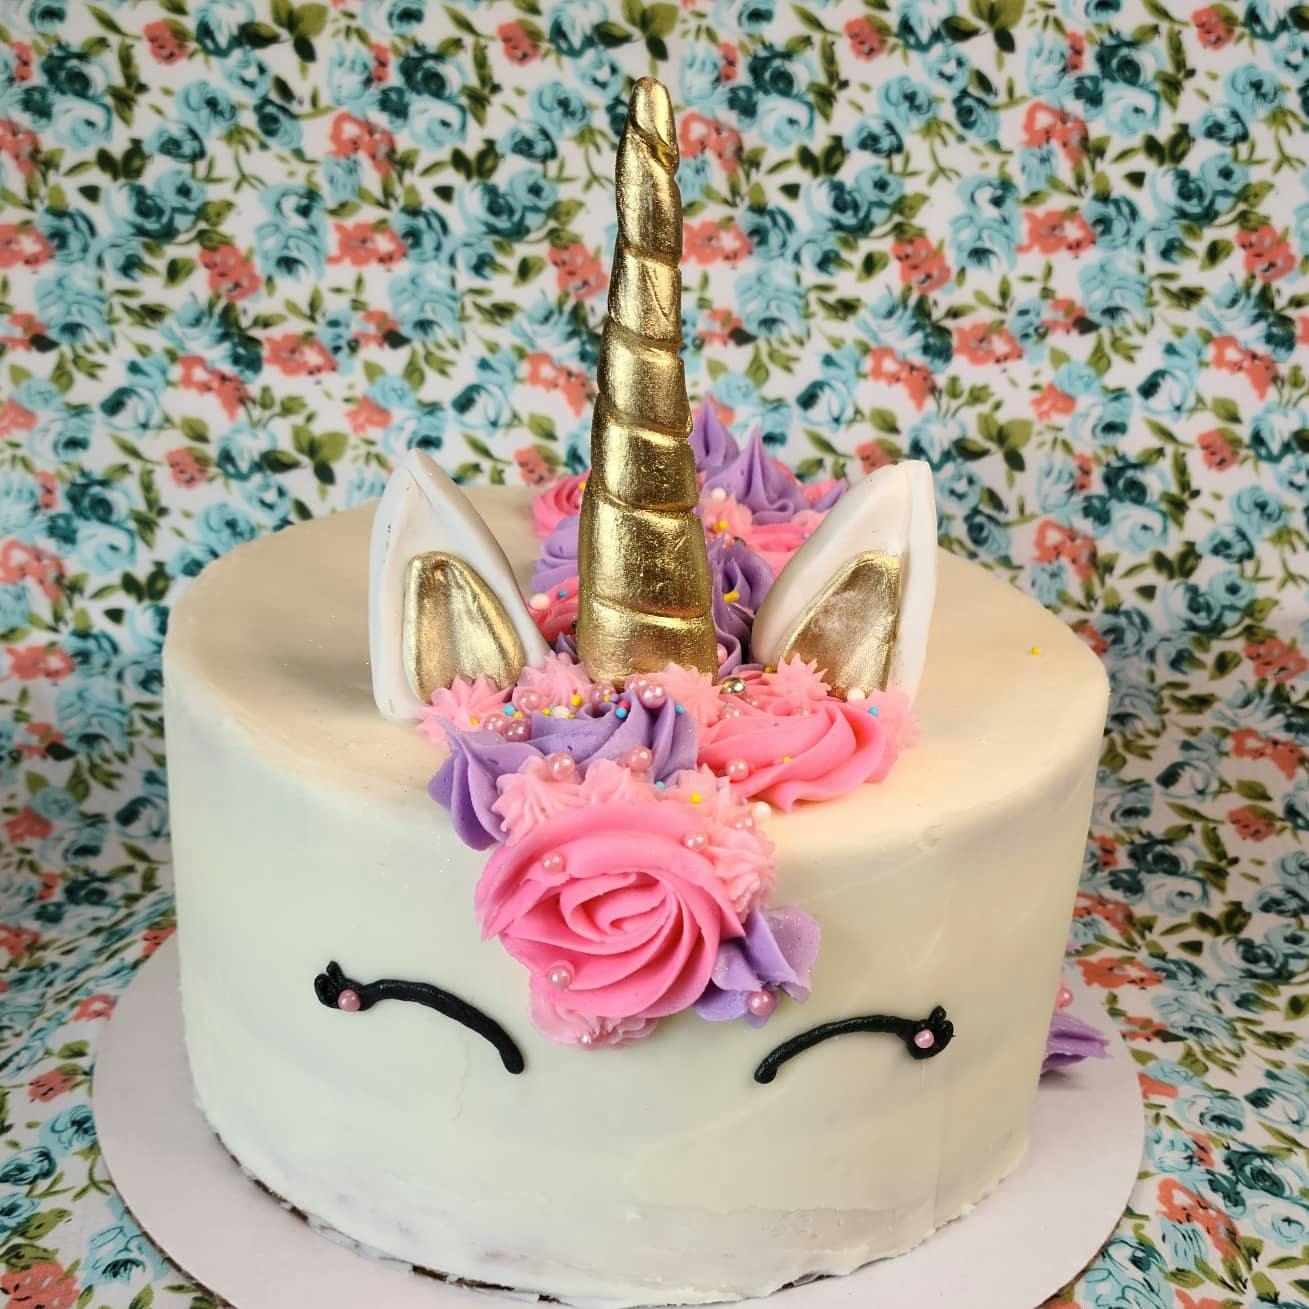 8" cake